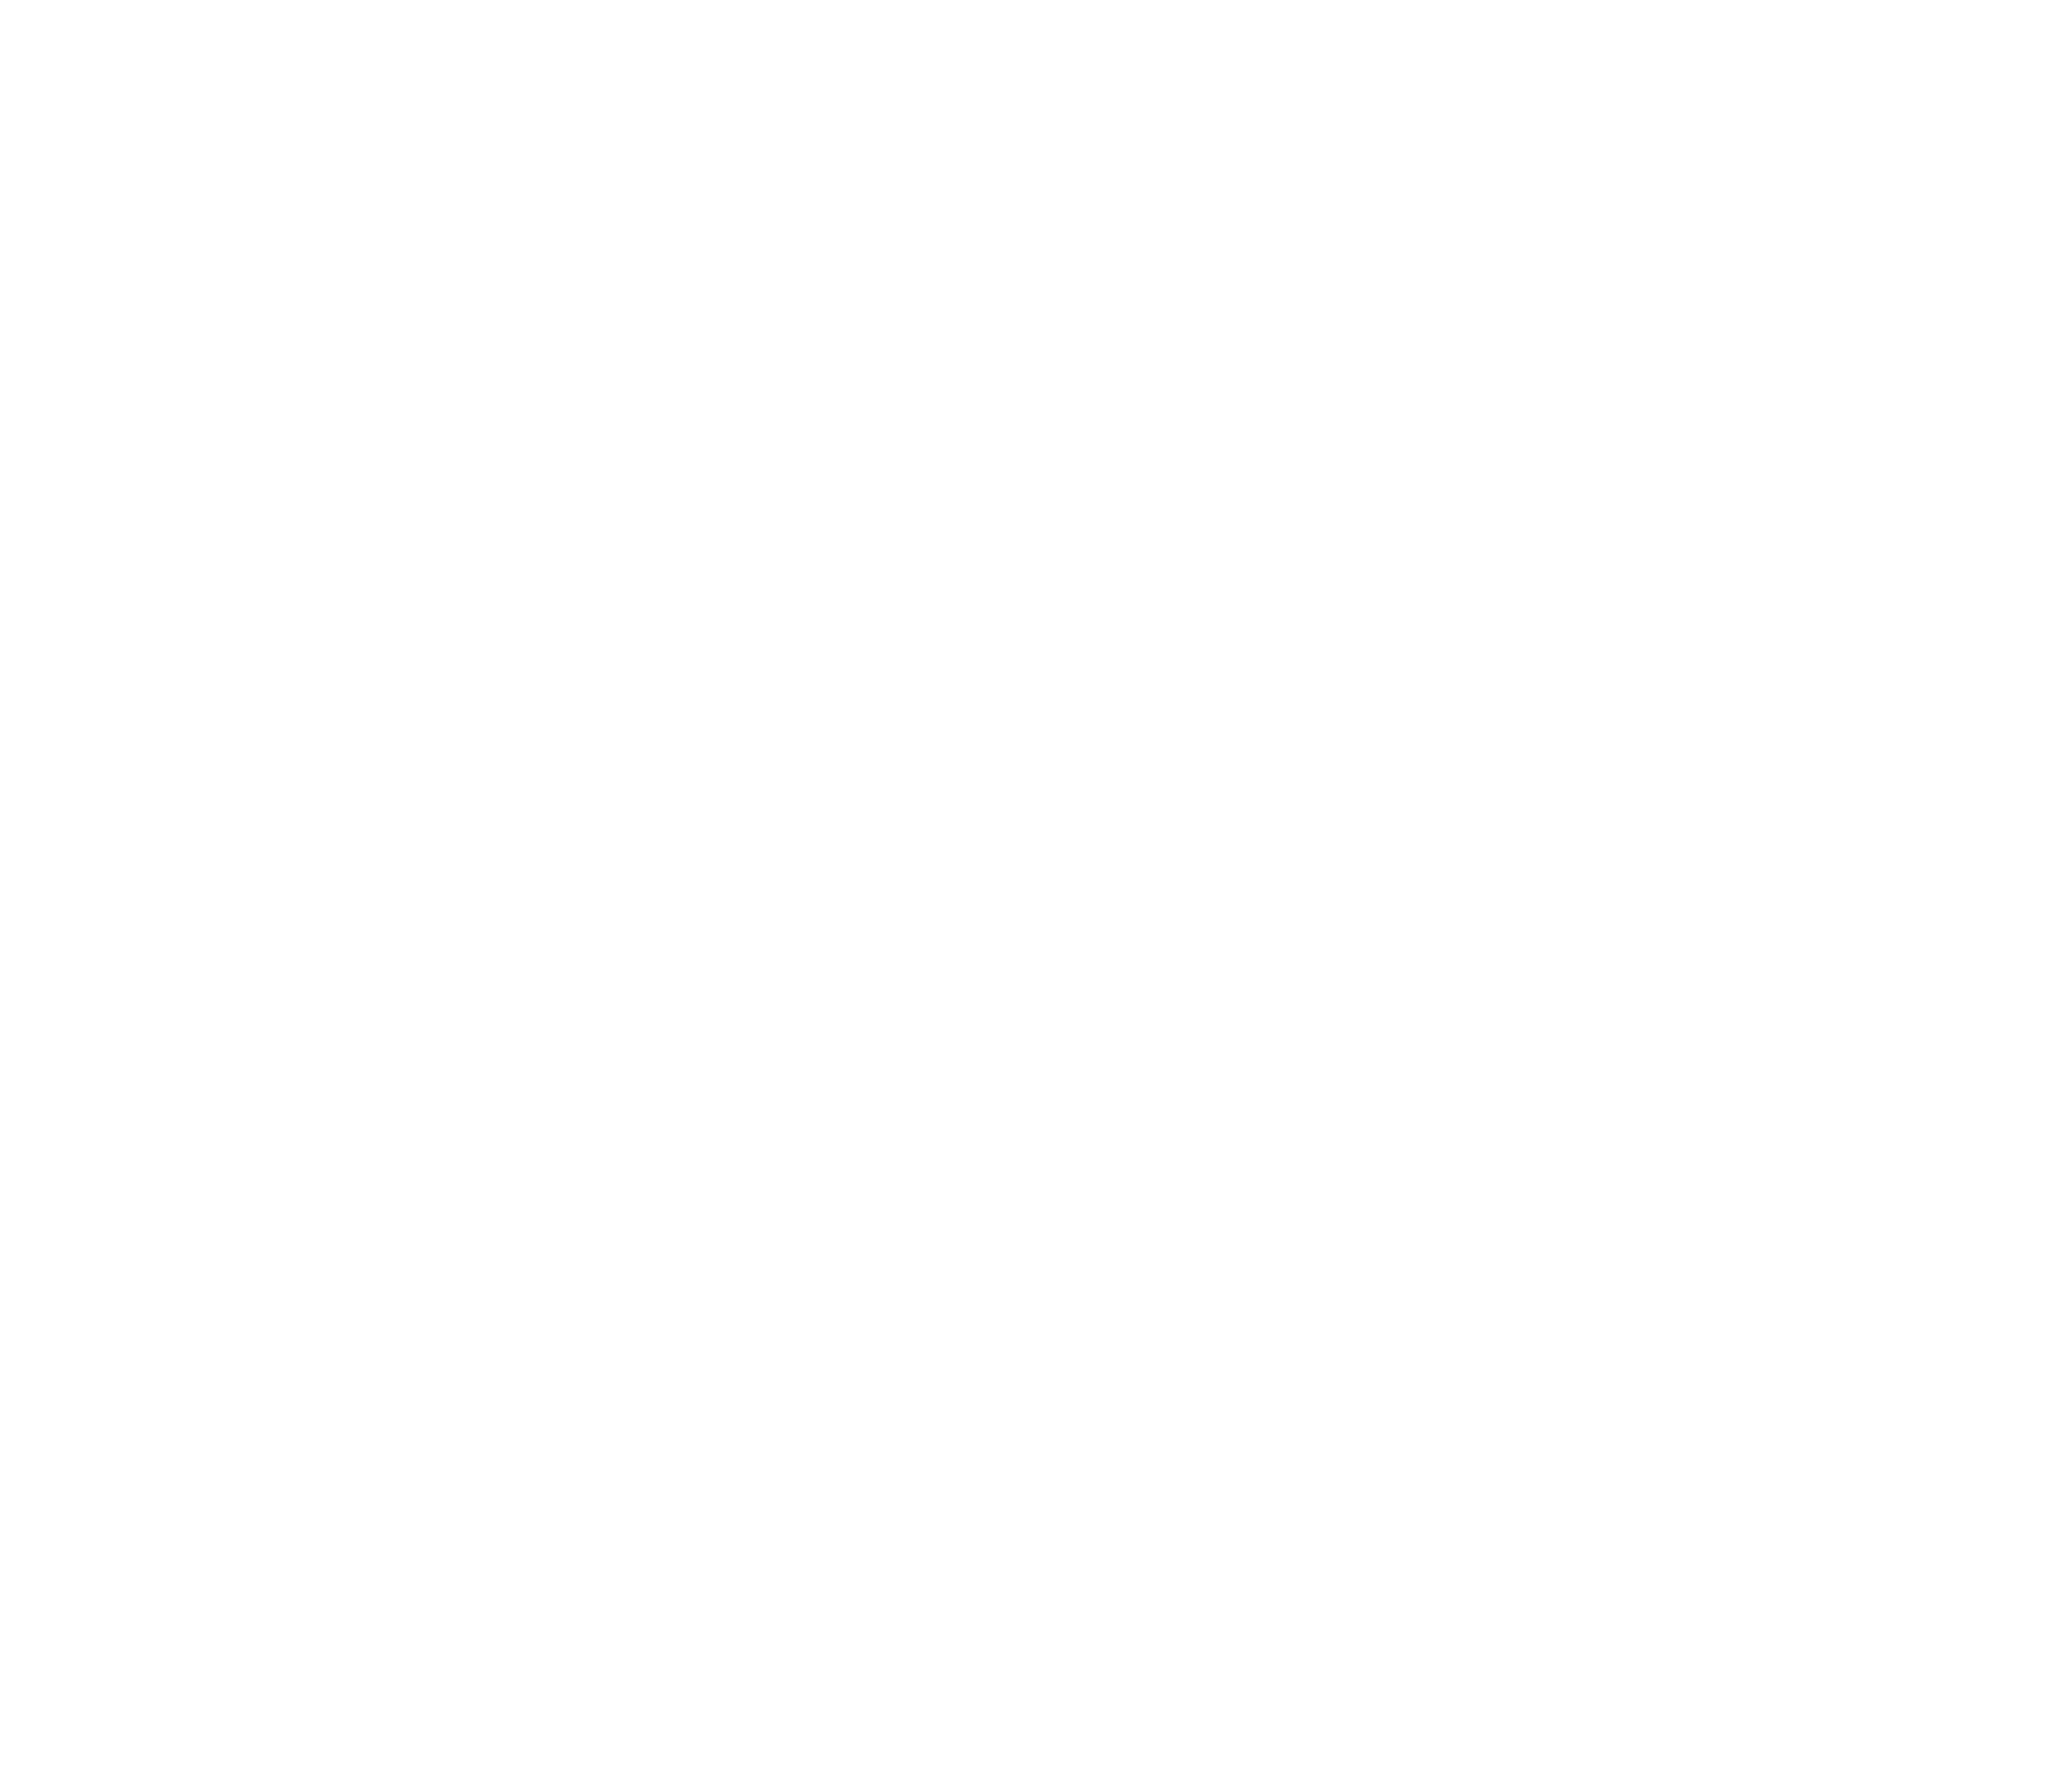 deck builder rockwall tx royse city dfw fence companies contractors best near me services texas elite fence deck